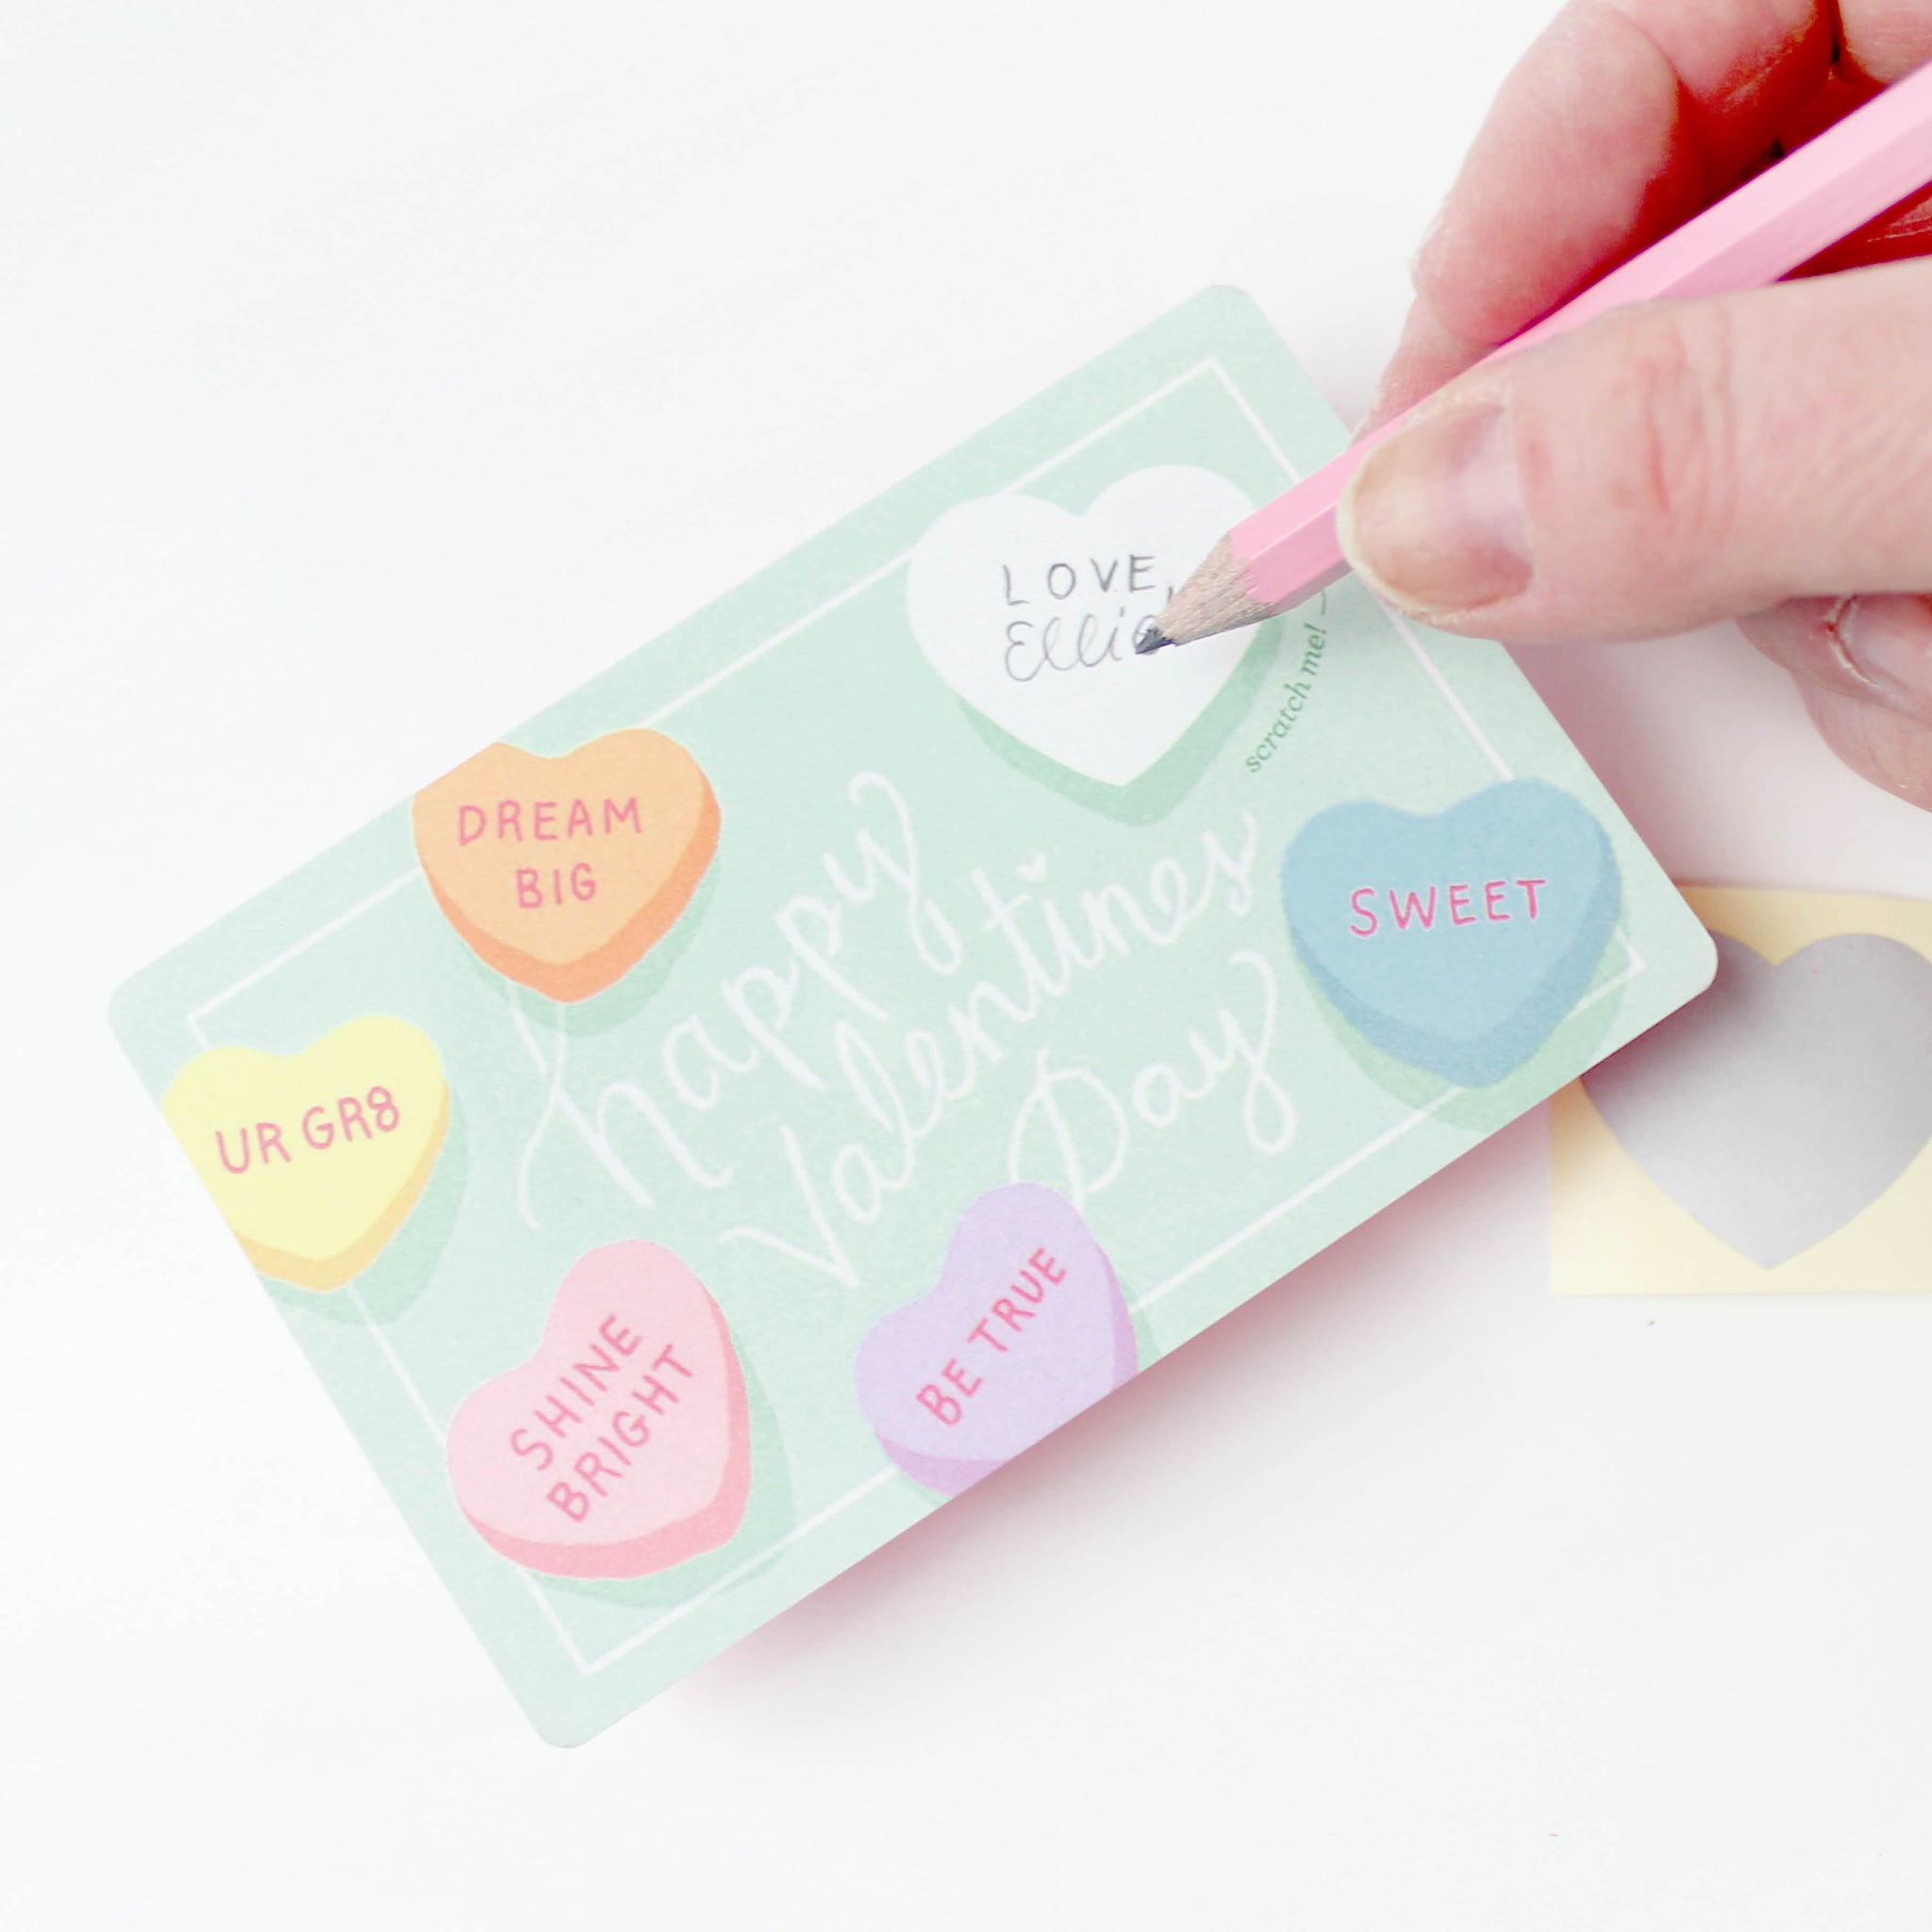  Heart Cards, Mini Valentine Cards, Hearts Mini Cards, Love  Cards, Love Mini Cards, Wedding Gift Cards, Gift Cards, Set of 8, Valentine  Cards : Handmade Products